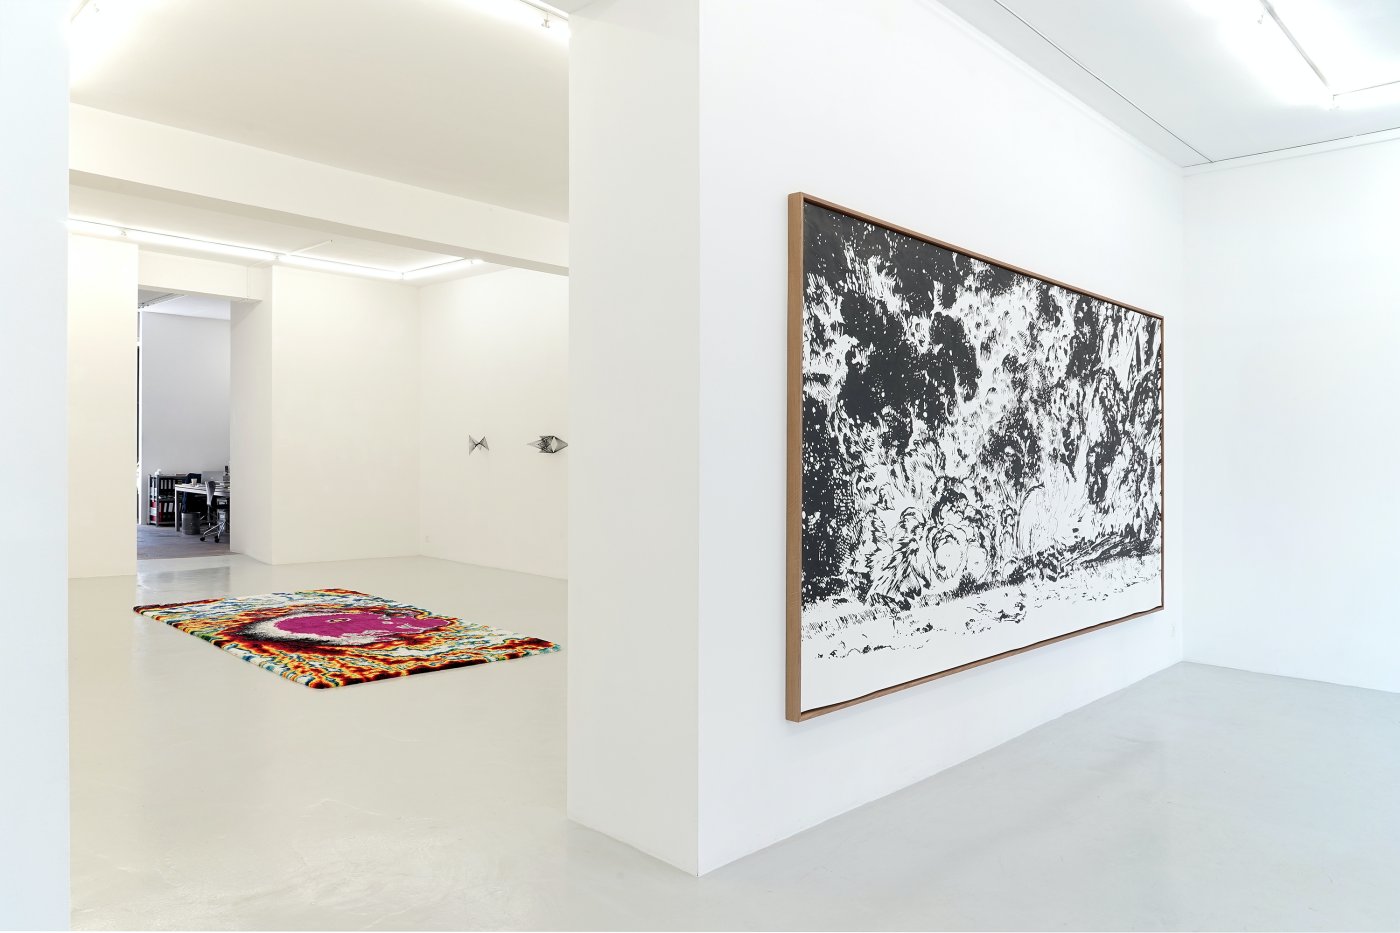 Installation image for Franziska Furter: Landscape with Landscape, at Lullin + Ferrari